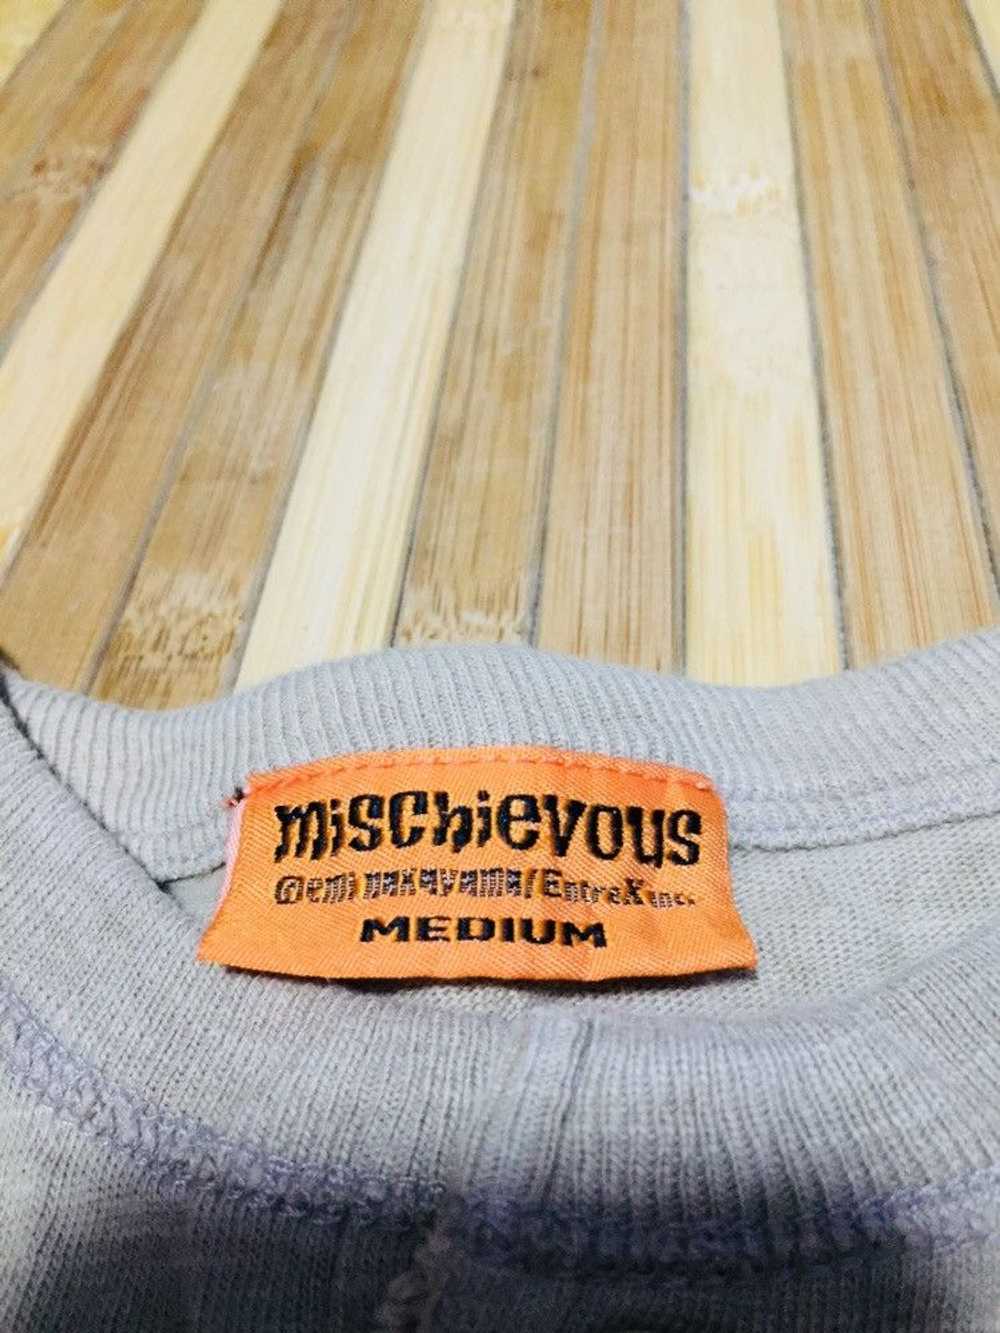 Japanese Brand Mischievous x vintage t shirt - image 3